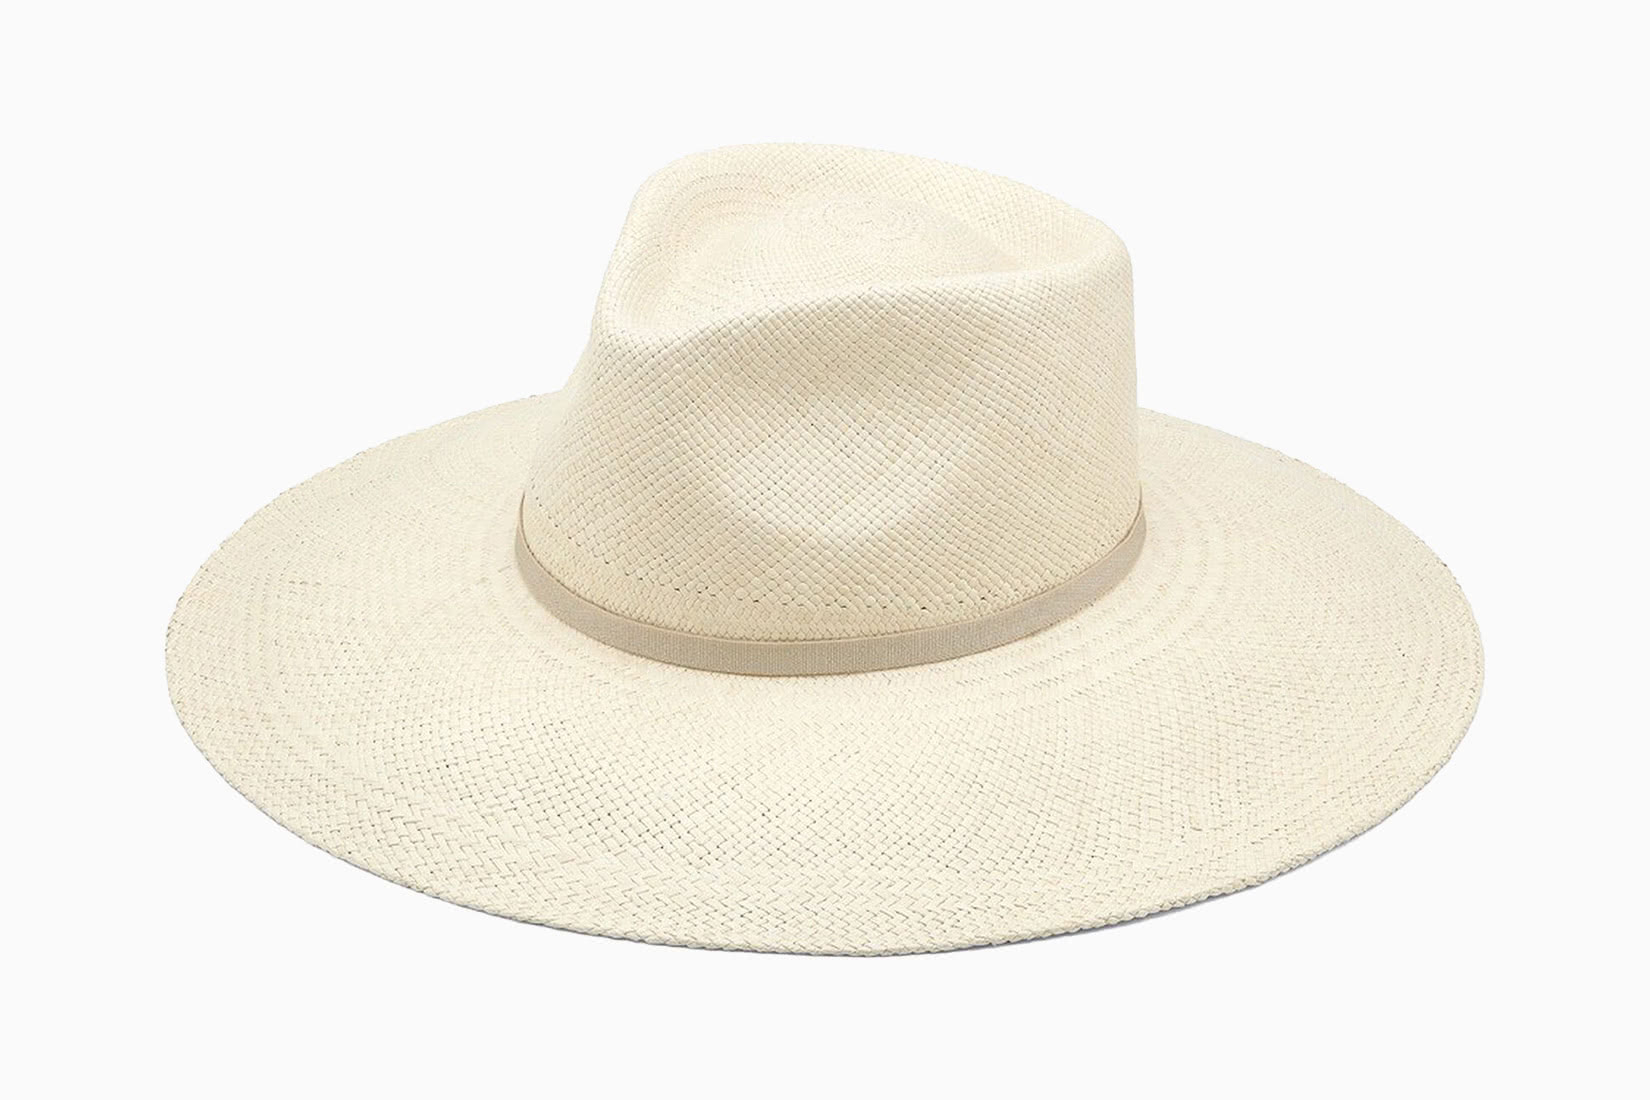 Cuyana wide brim summer hat review - Luxe Digital